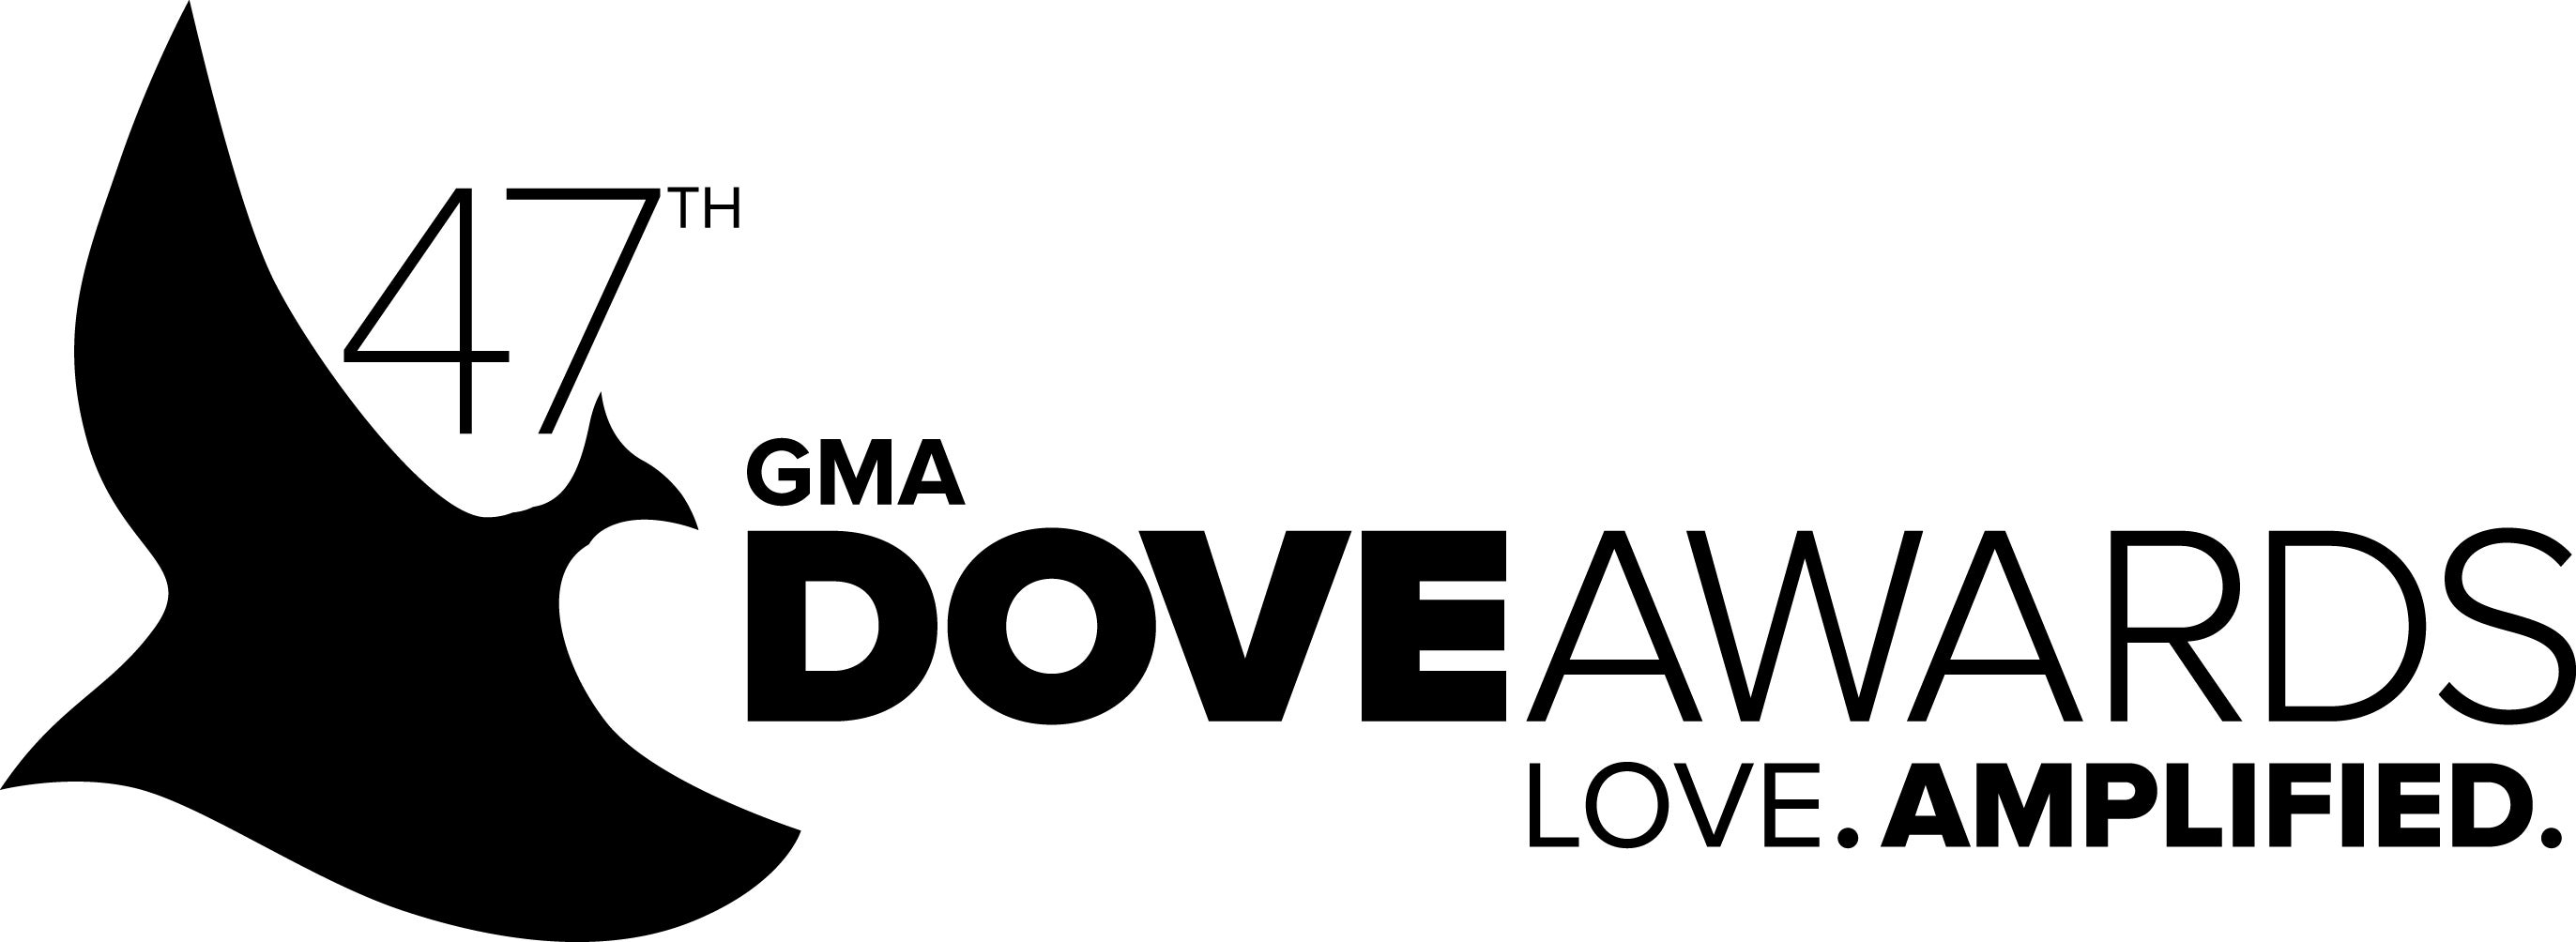 TBN Hosts Christian Music's 47th Annual GMA Dove Awards Sunday, Oct